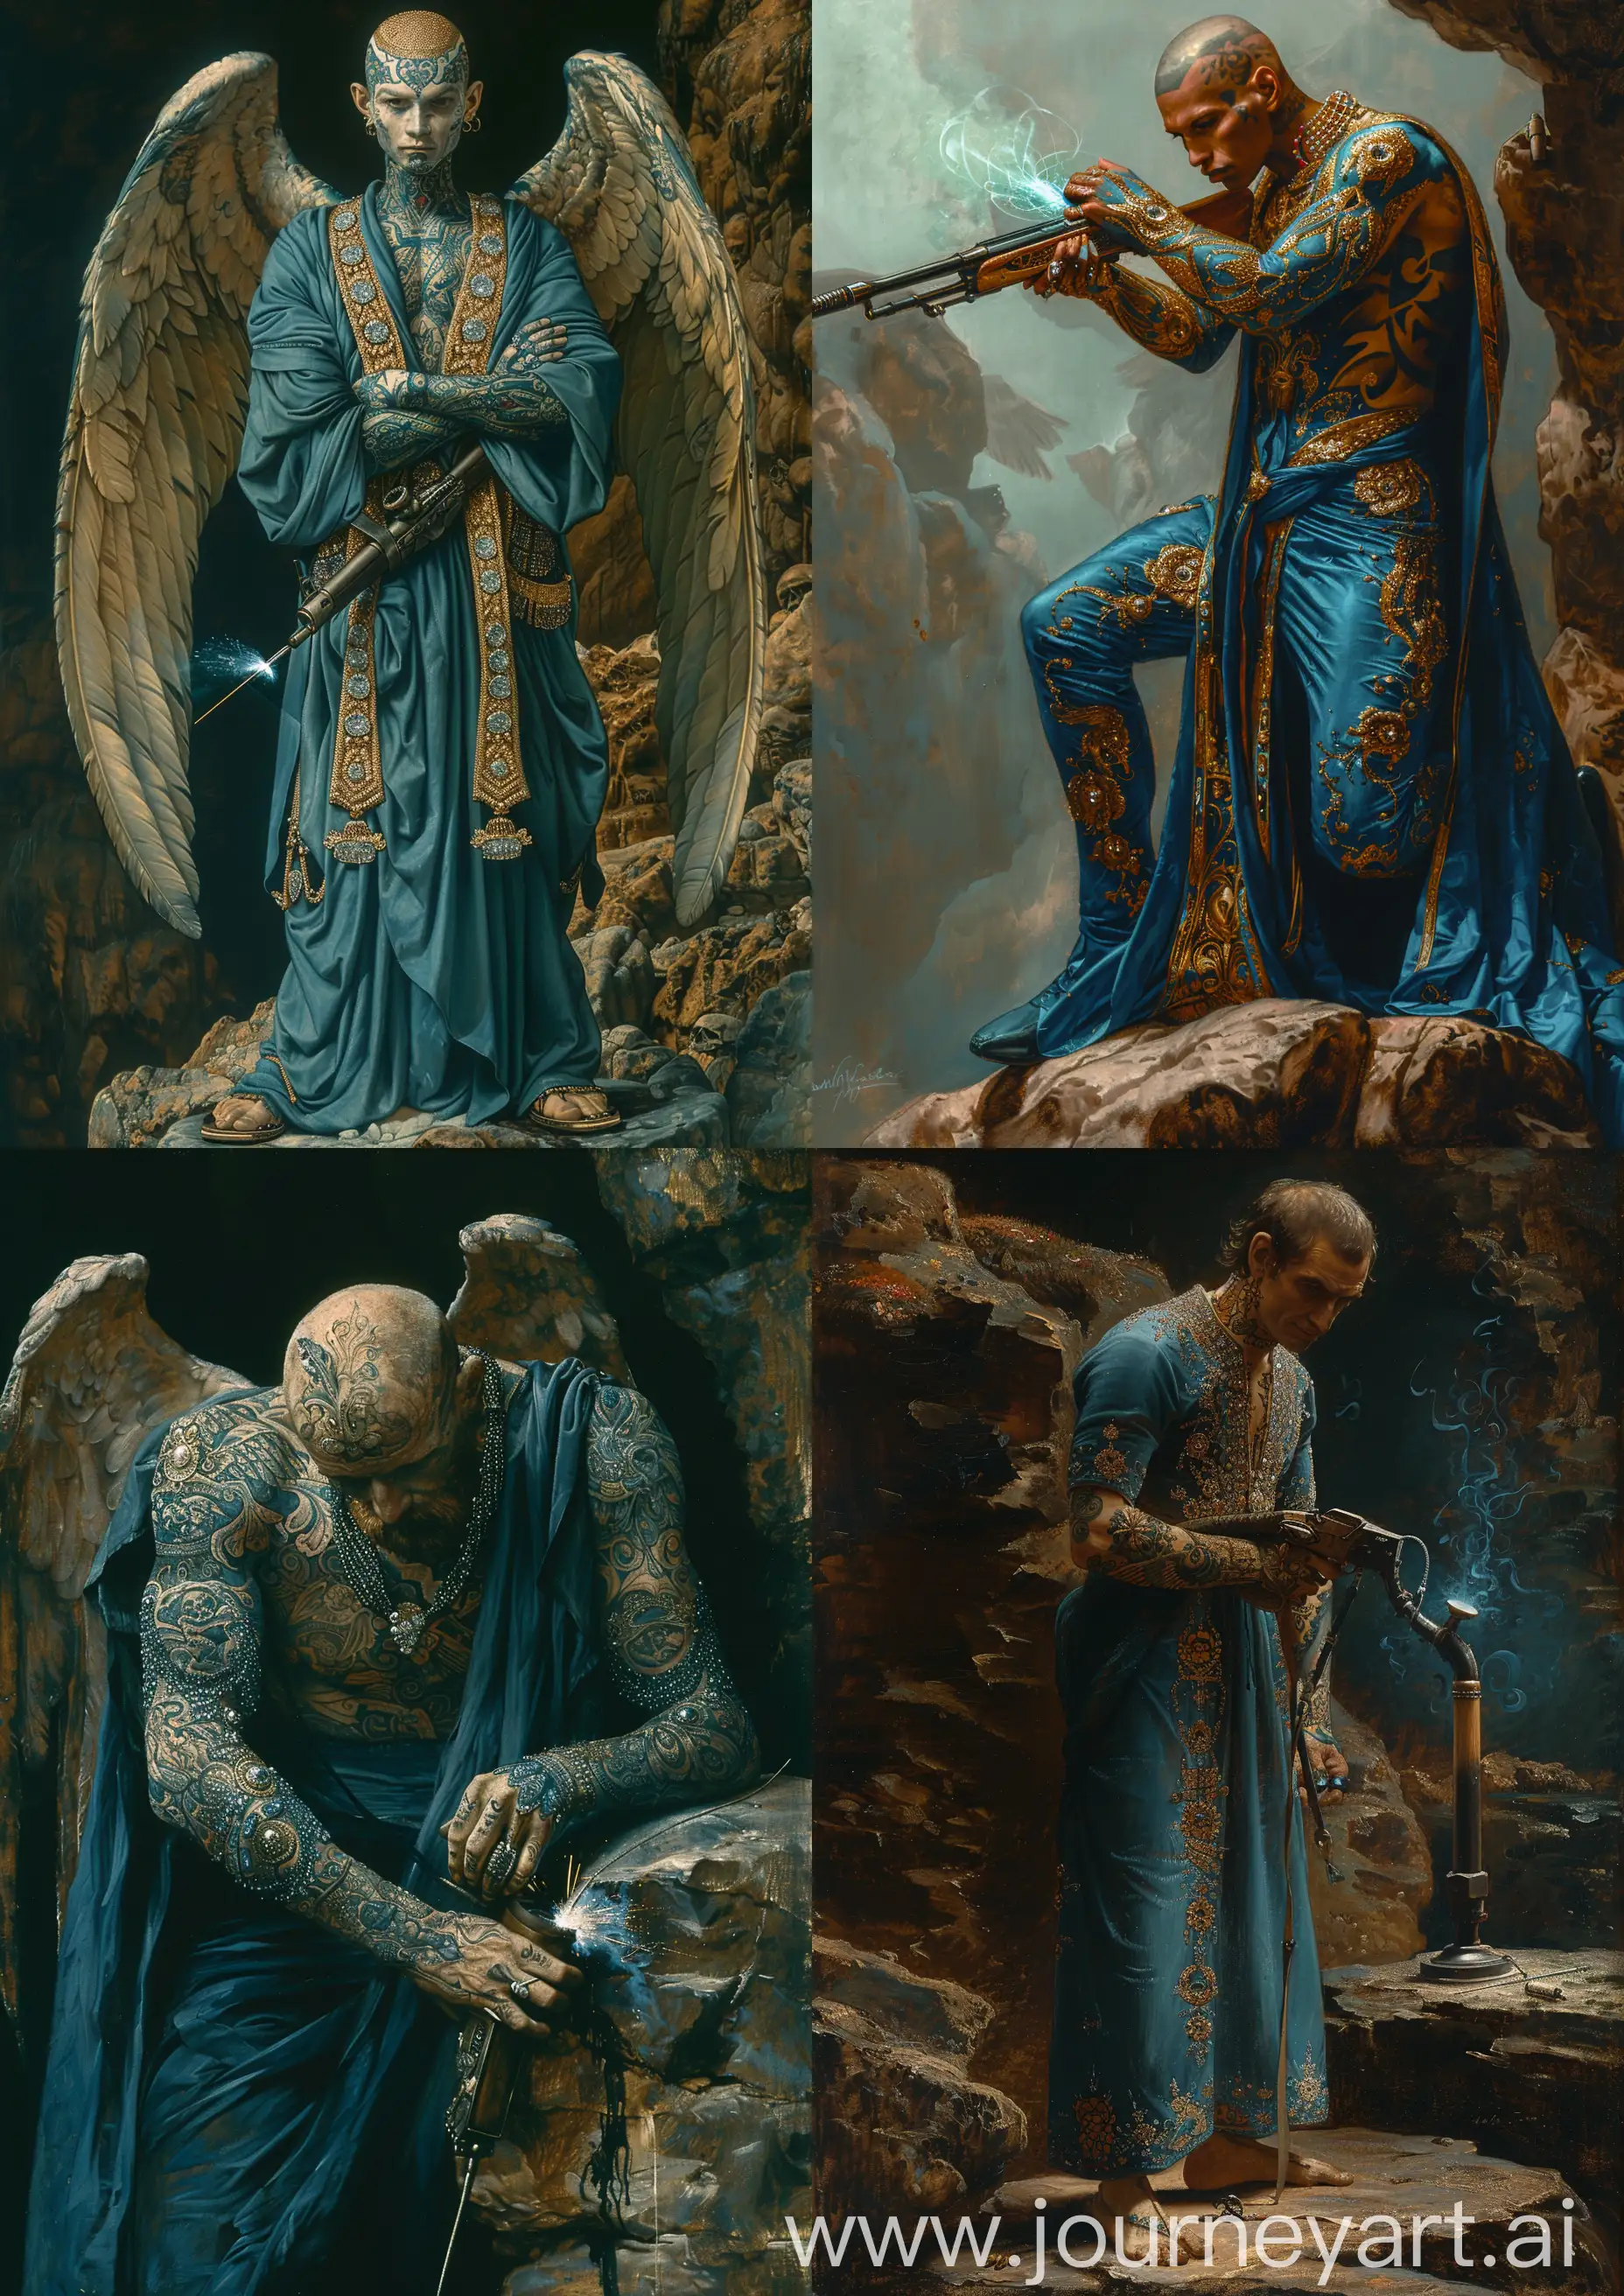 Tattooed-Angelic-Warrior-in-Ornate-Blue-Robes-Wielding-Kalashnikov-on-Rocky-Outcrop